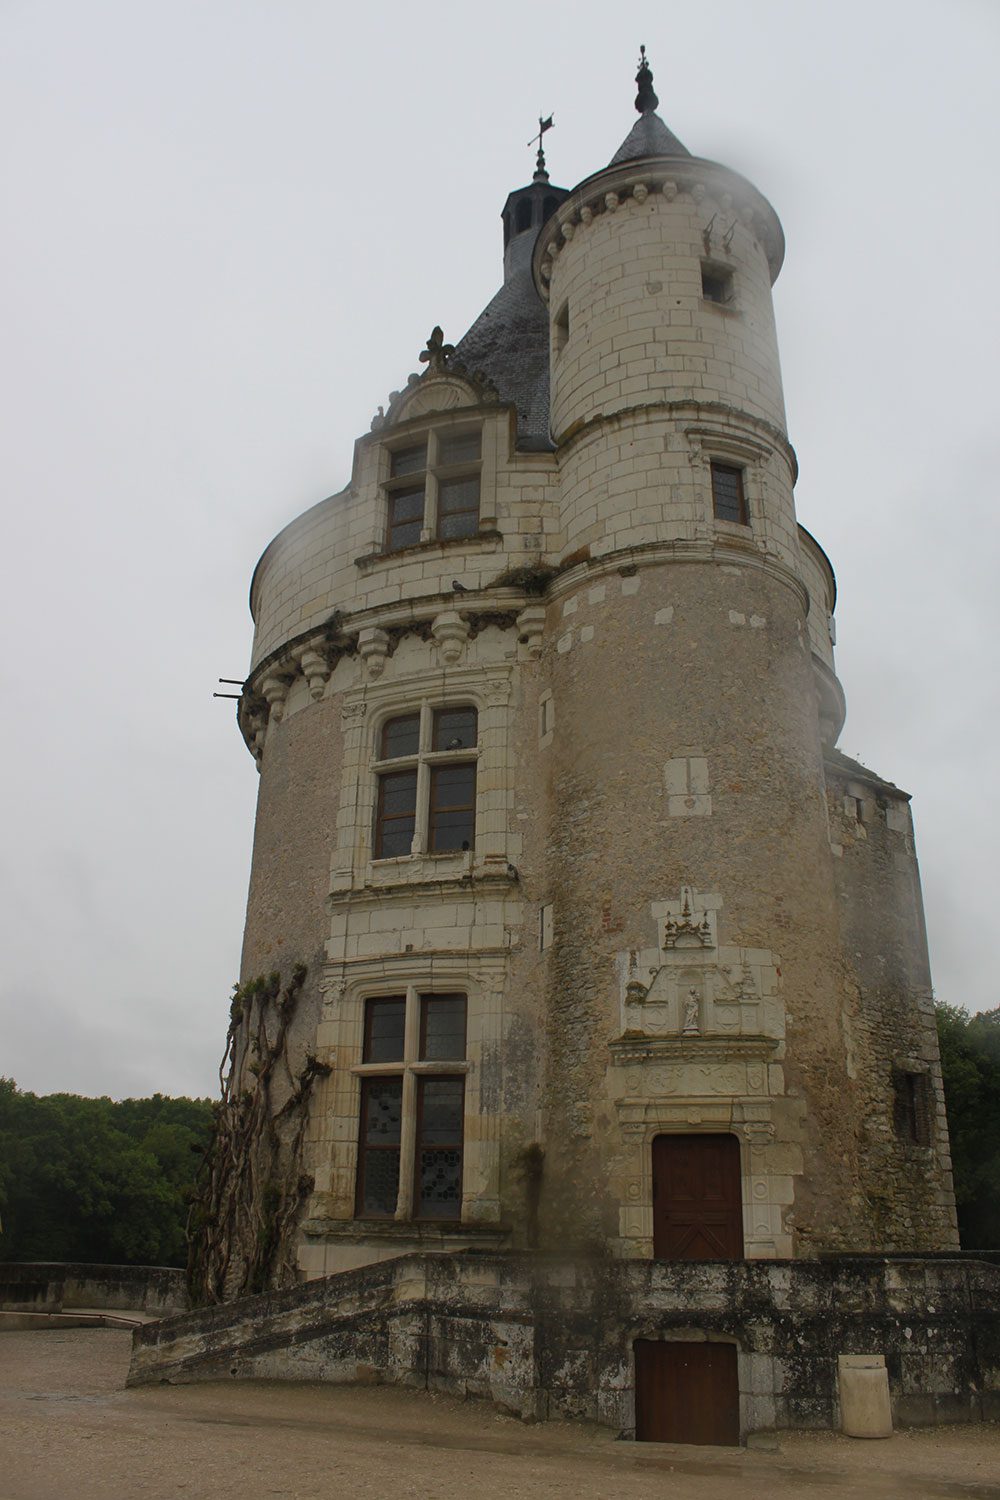 Chenonceau, Loire Valley